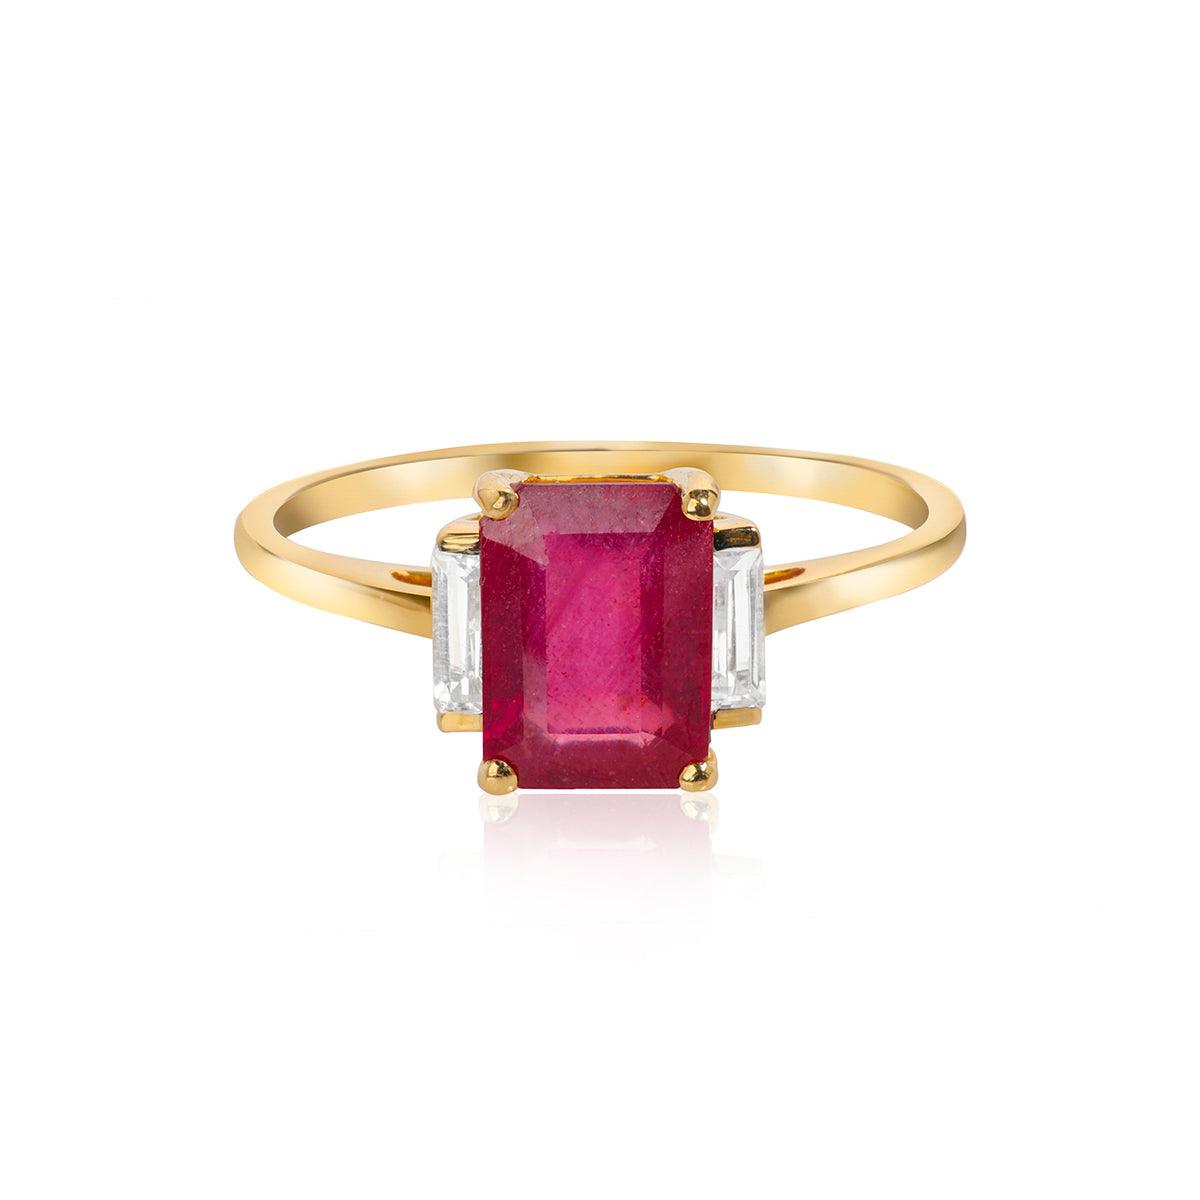 2.07 Ct. Glass Filled Ruby White Topaz Ring 14K Yellow Gold Jewelry - YoTreasure